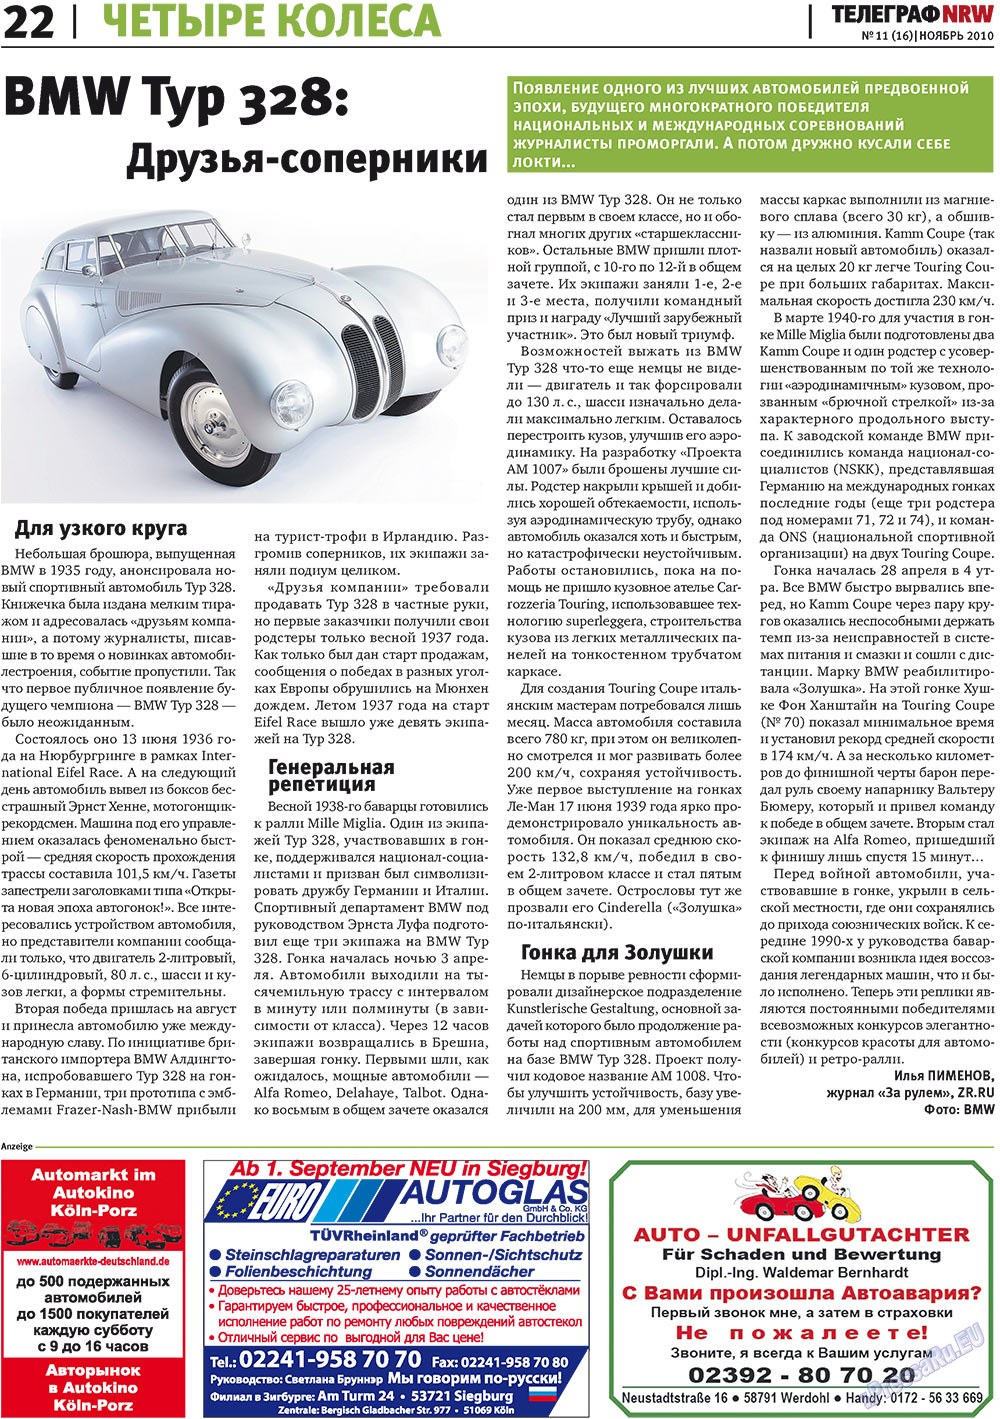 Телеграф NRW, газета. 2010 №11 стр.22